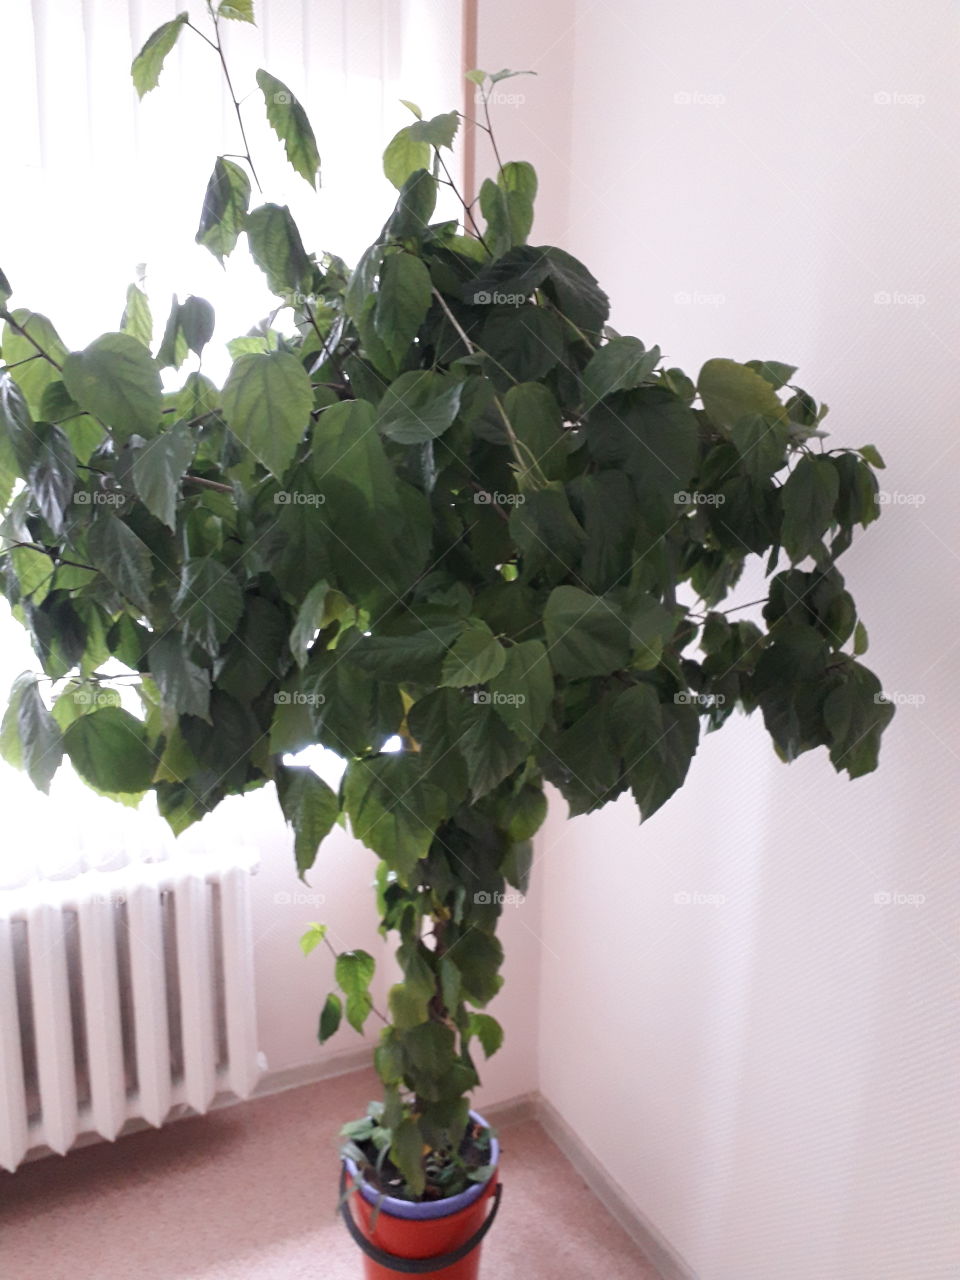 Leaf, Growth, Flora, Houseplant, Pot